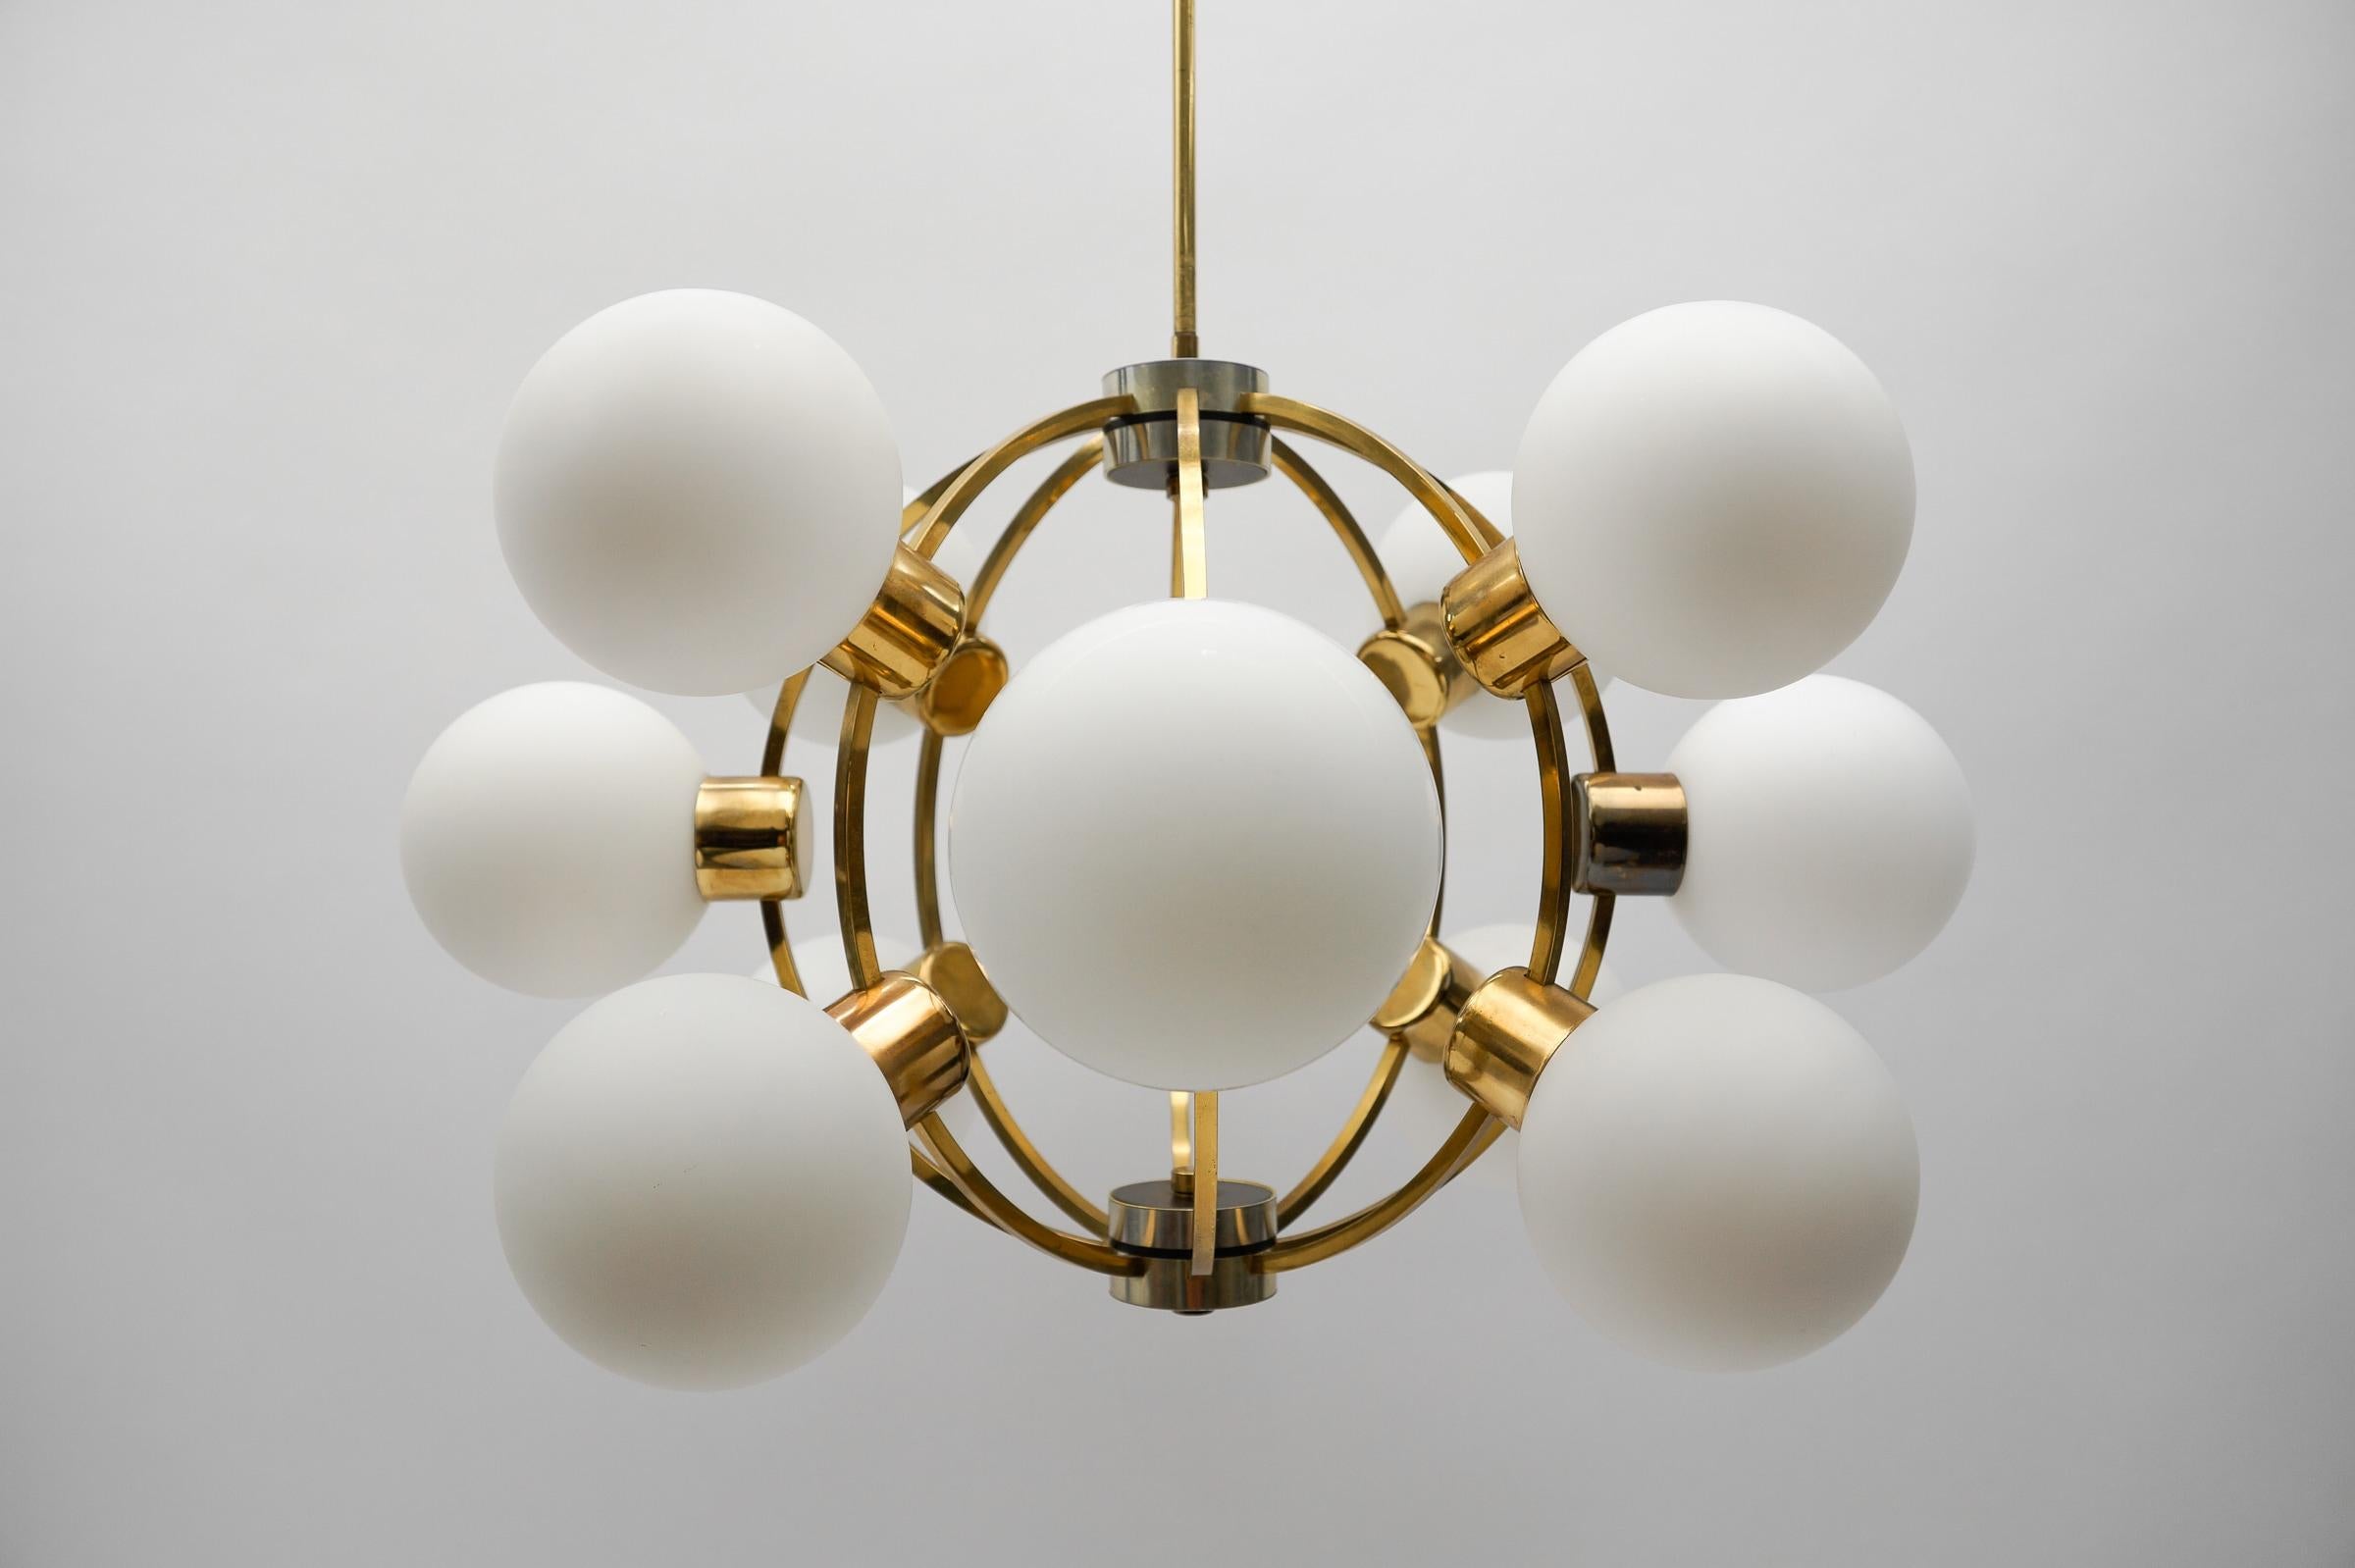 Large Mid-Century Modern Orbit or Sputnik Lamp with 12 Opaline Glass Balls For Sale 3